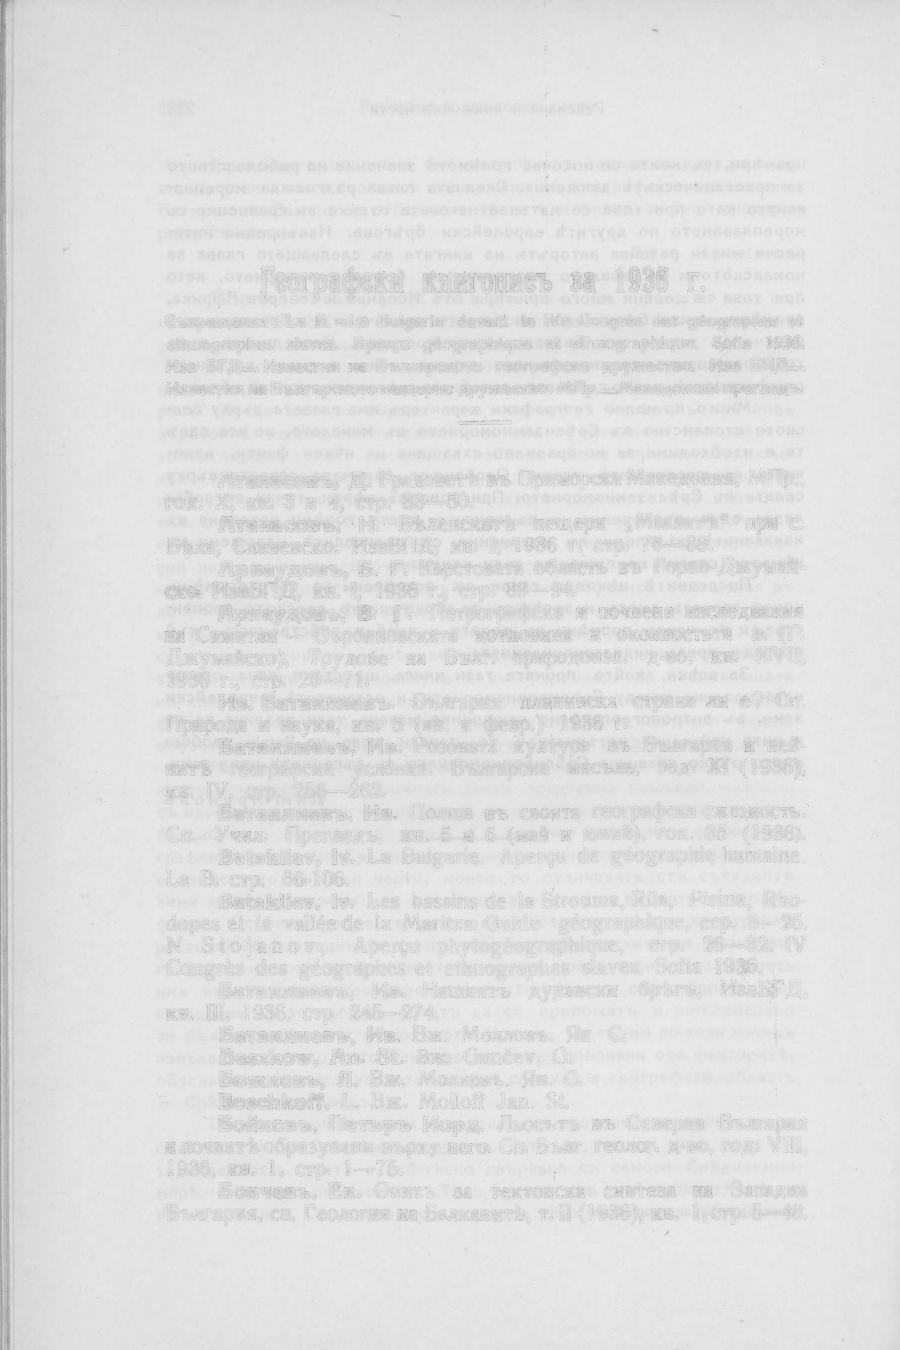 rеоrрафски кииrописъ за 1936 r. Съкращения: La В. -::...La Bu\garie devant le IVP. Congres des geographes et ethnographes slaves. f\per<;u geographique et ethnographique. Sofia 1936.